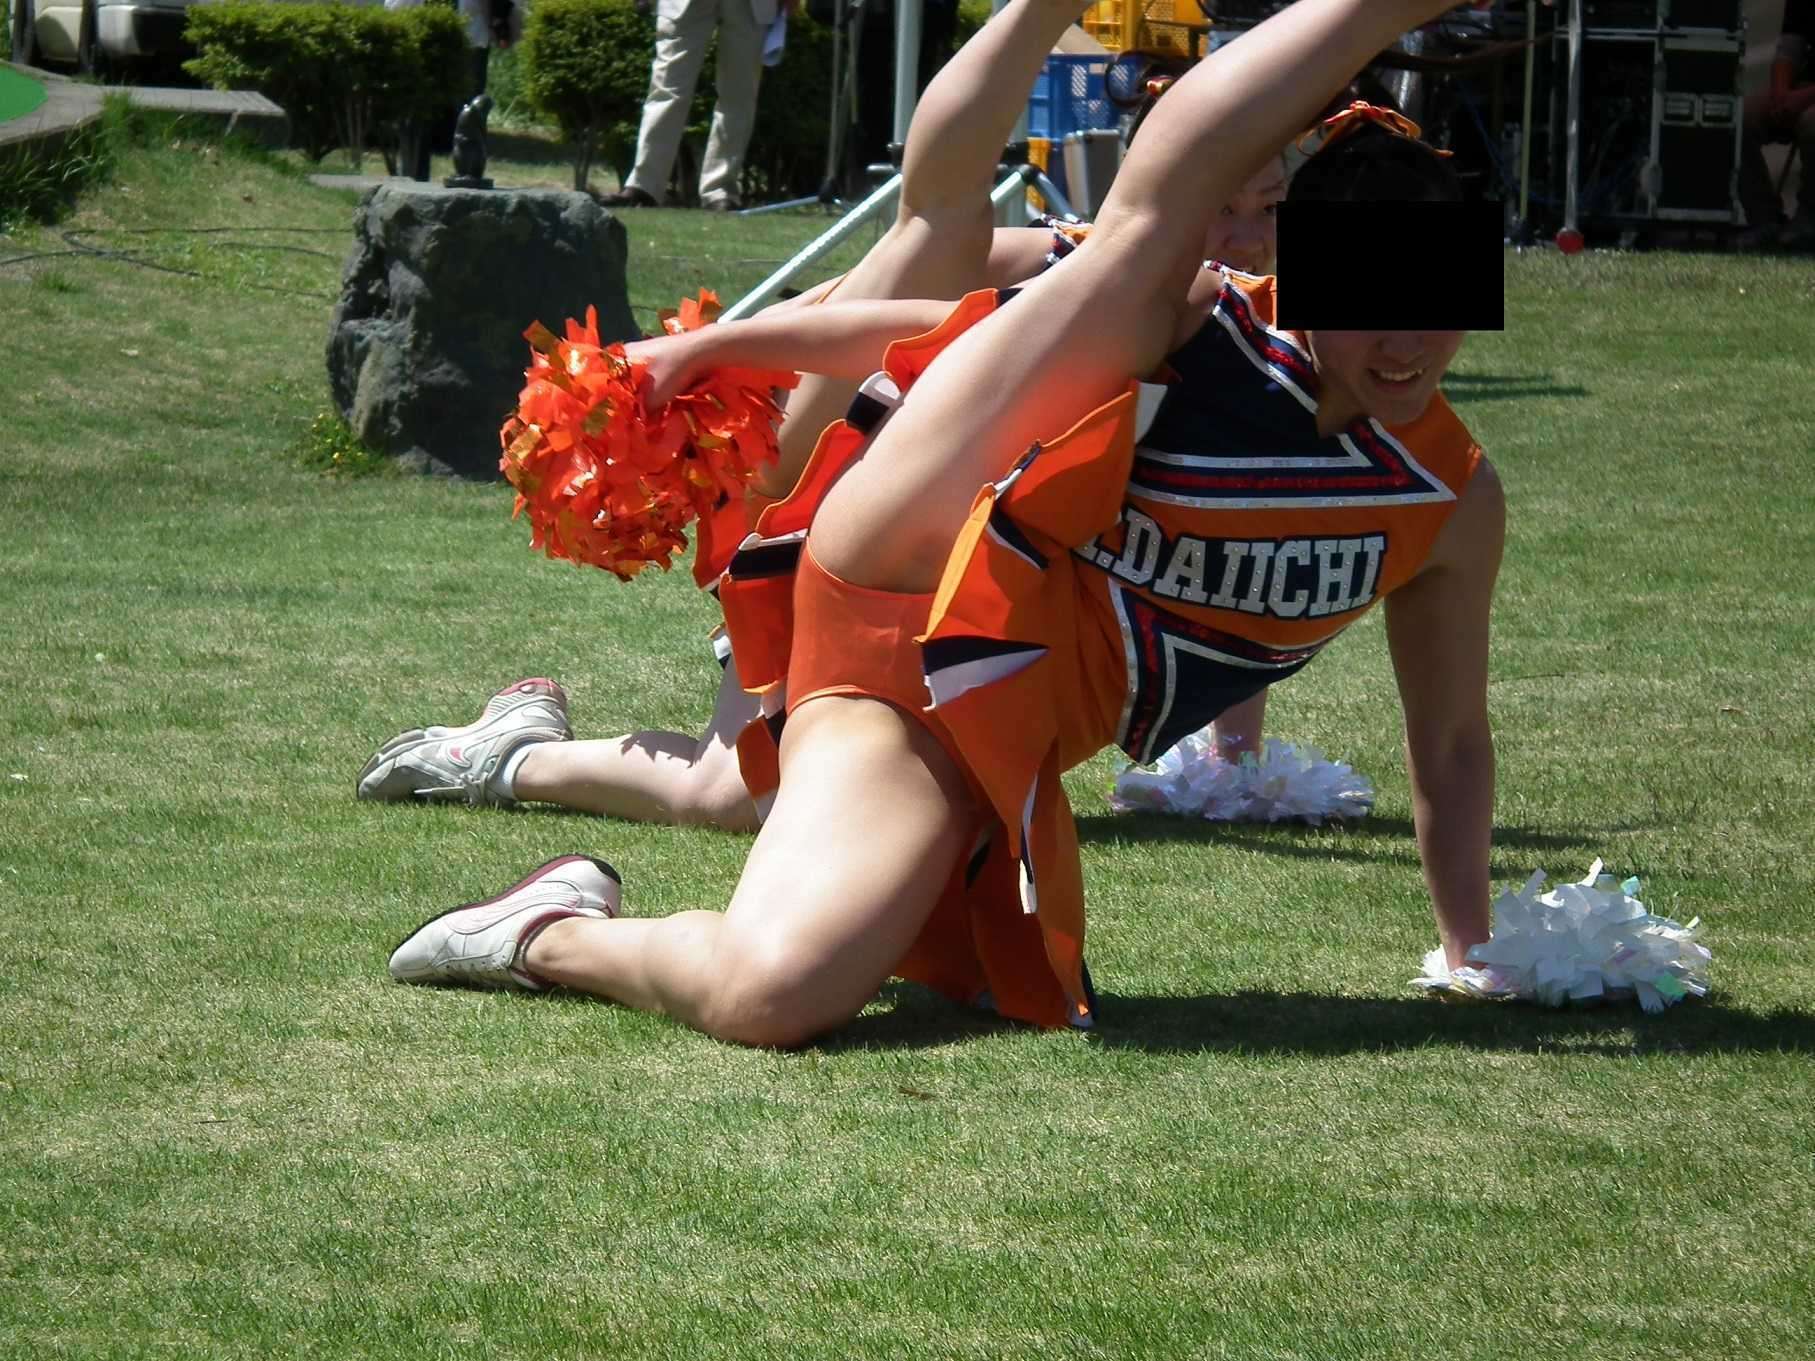 Up cheerleader skirt